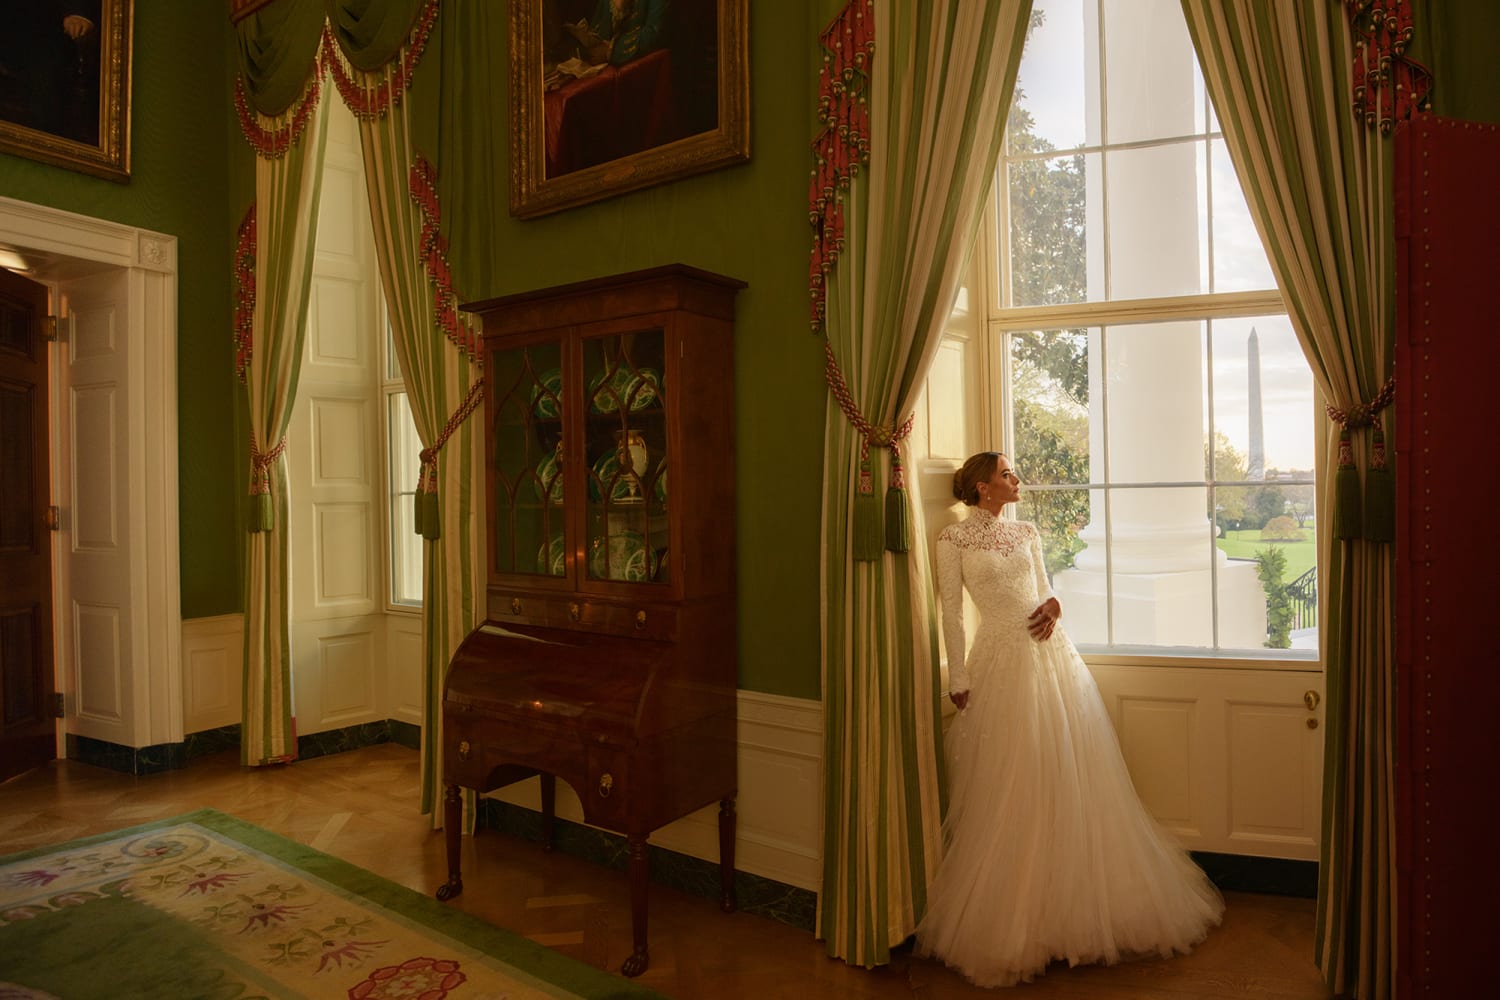 Photos Show the White House Interior, Where Naomi Biden Got Married